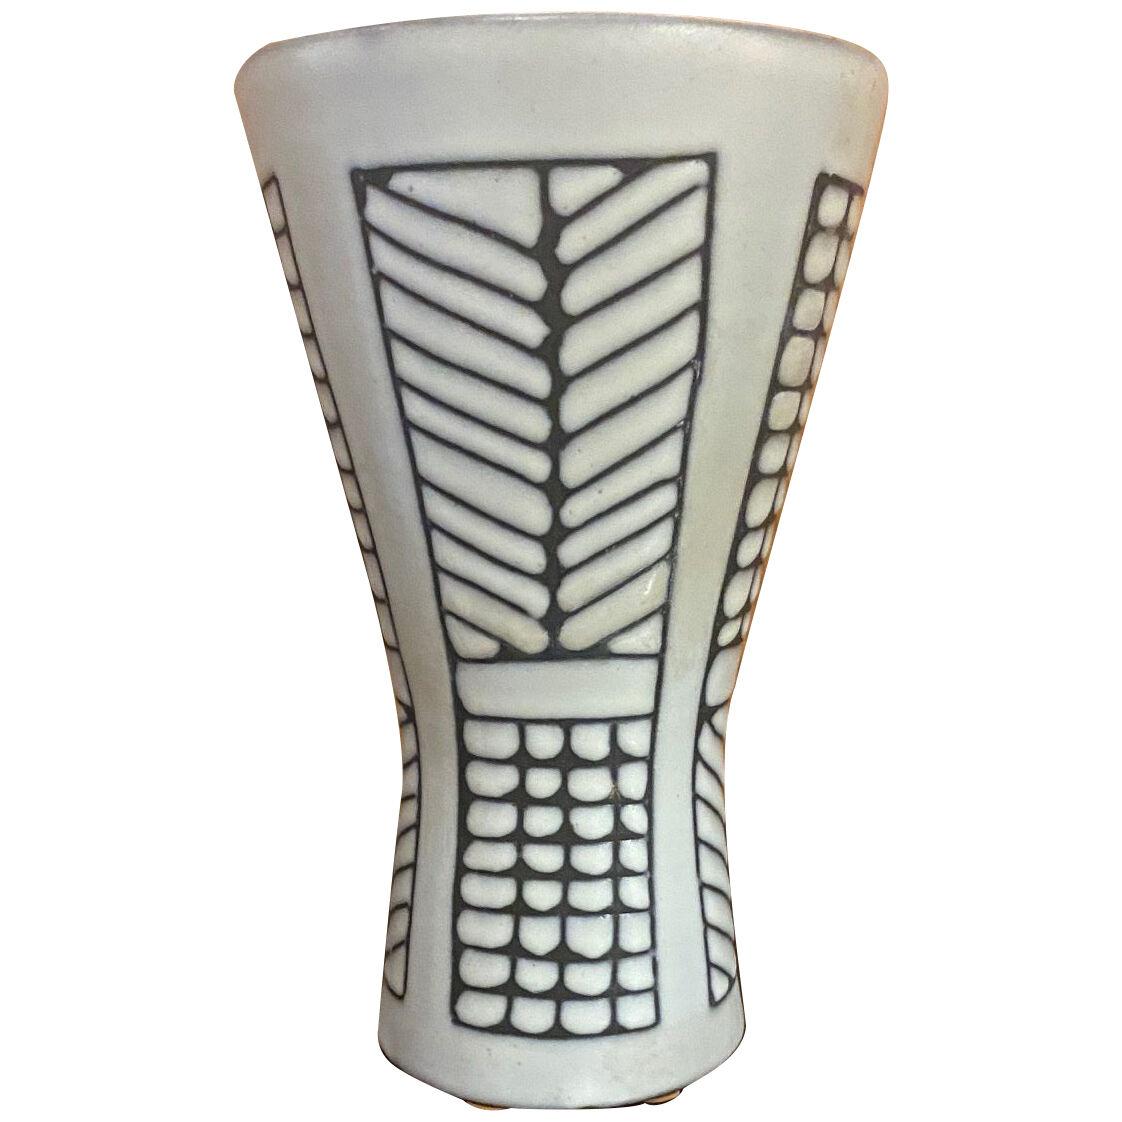 Ceramic Vase "Cornet" by Roger Capron, Vallauris, France, 1950s